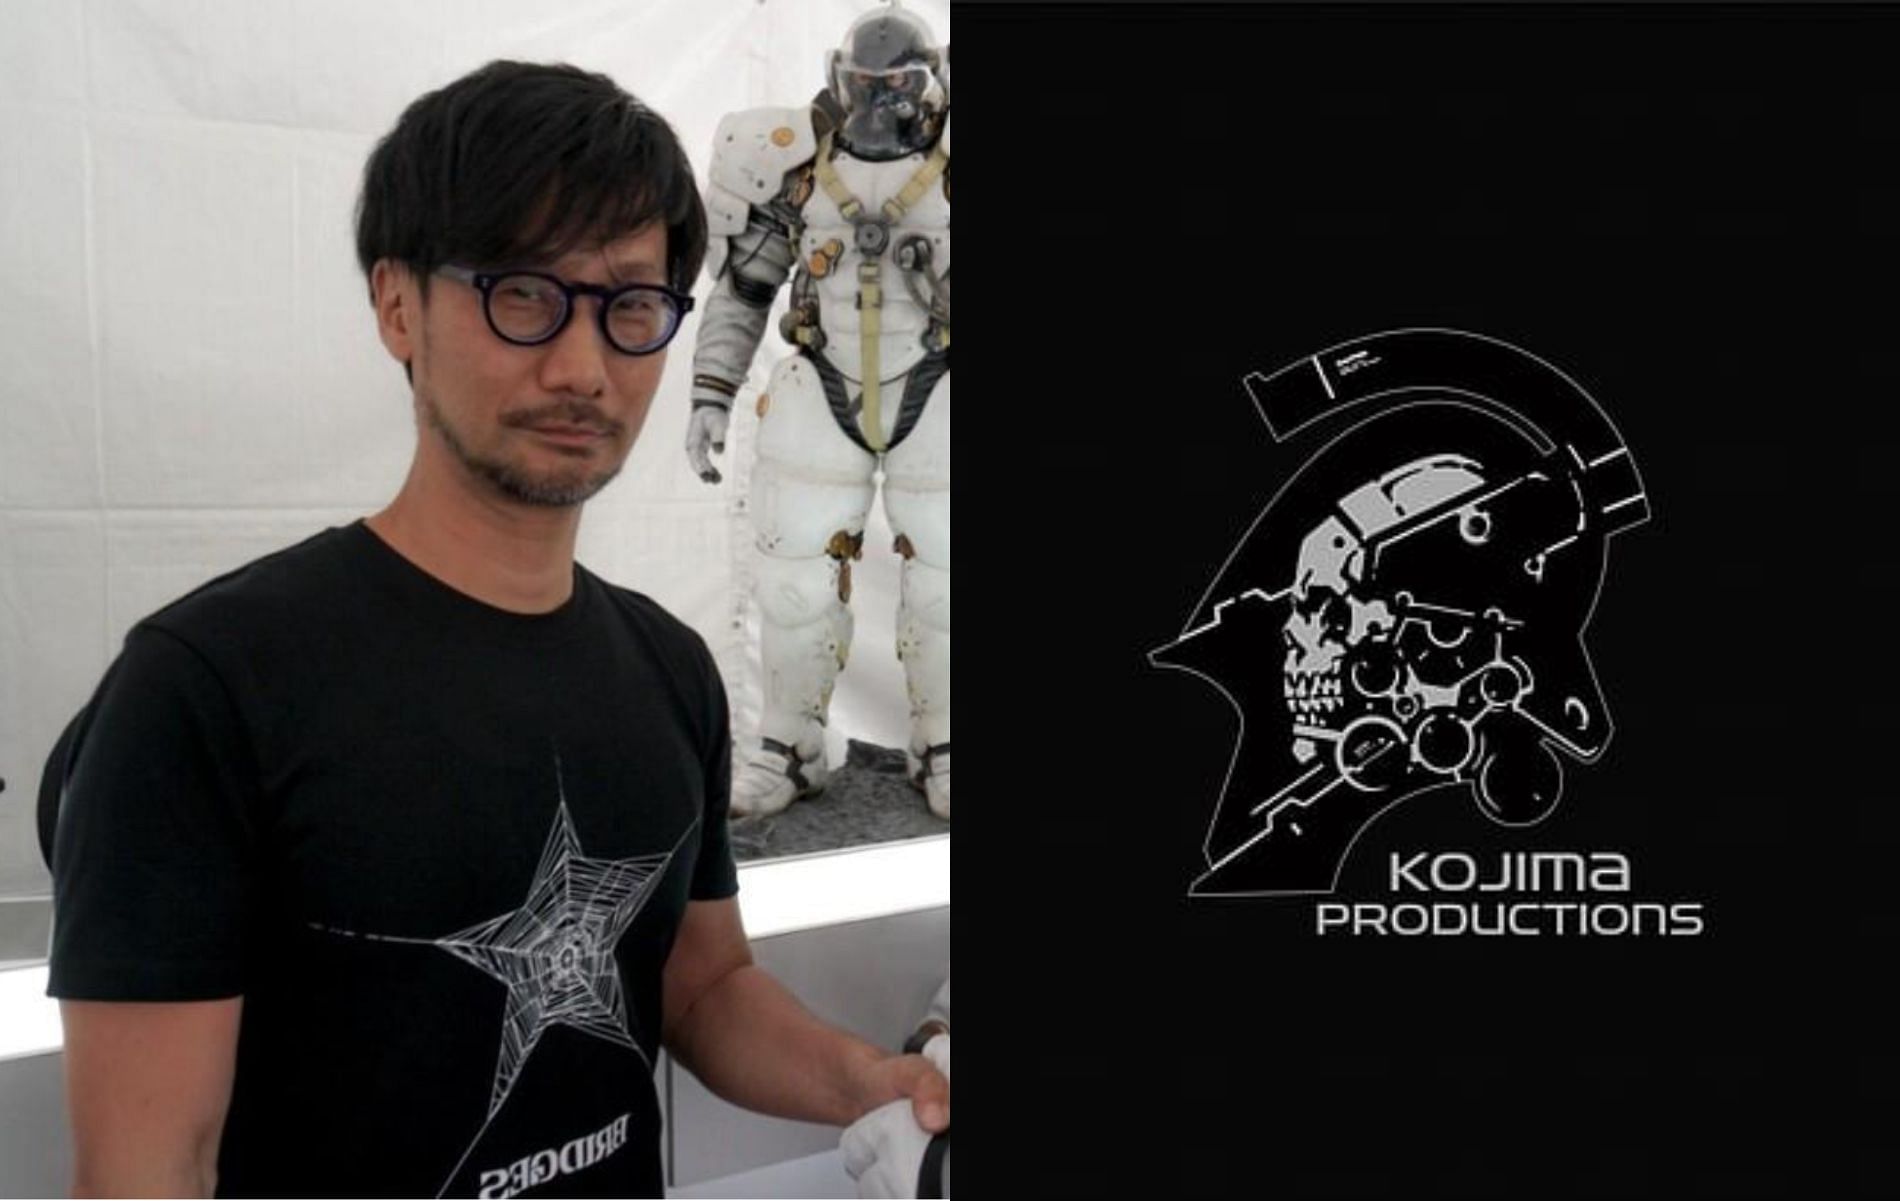 Kojima Productions to pursue legal action against false accusation (Image by Hideo Kojima and Kojima Production)